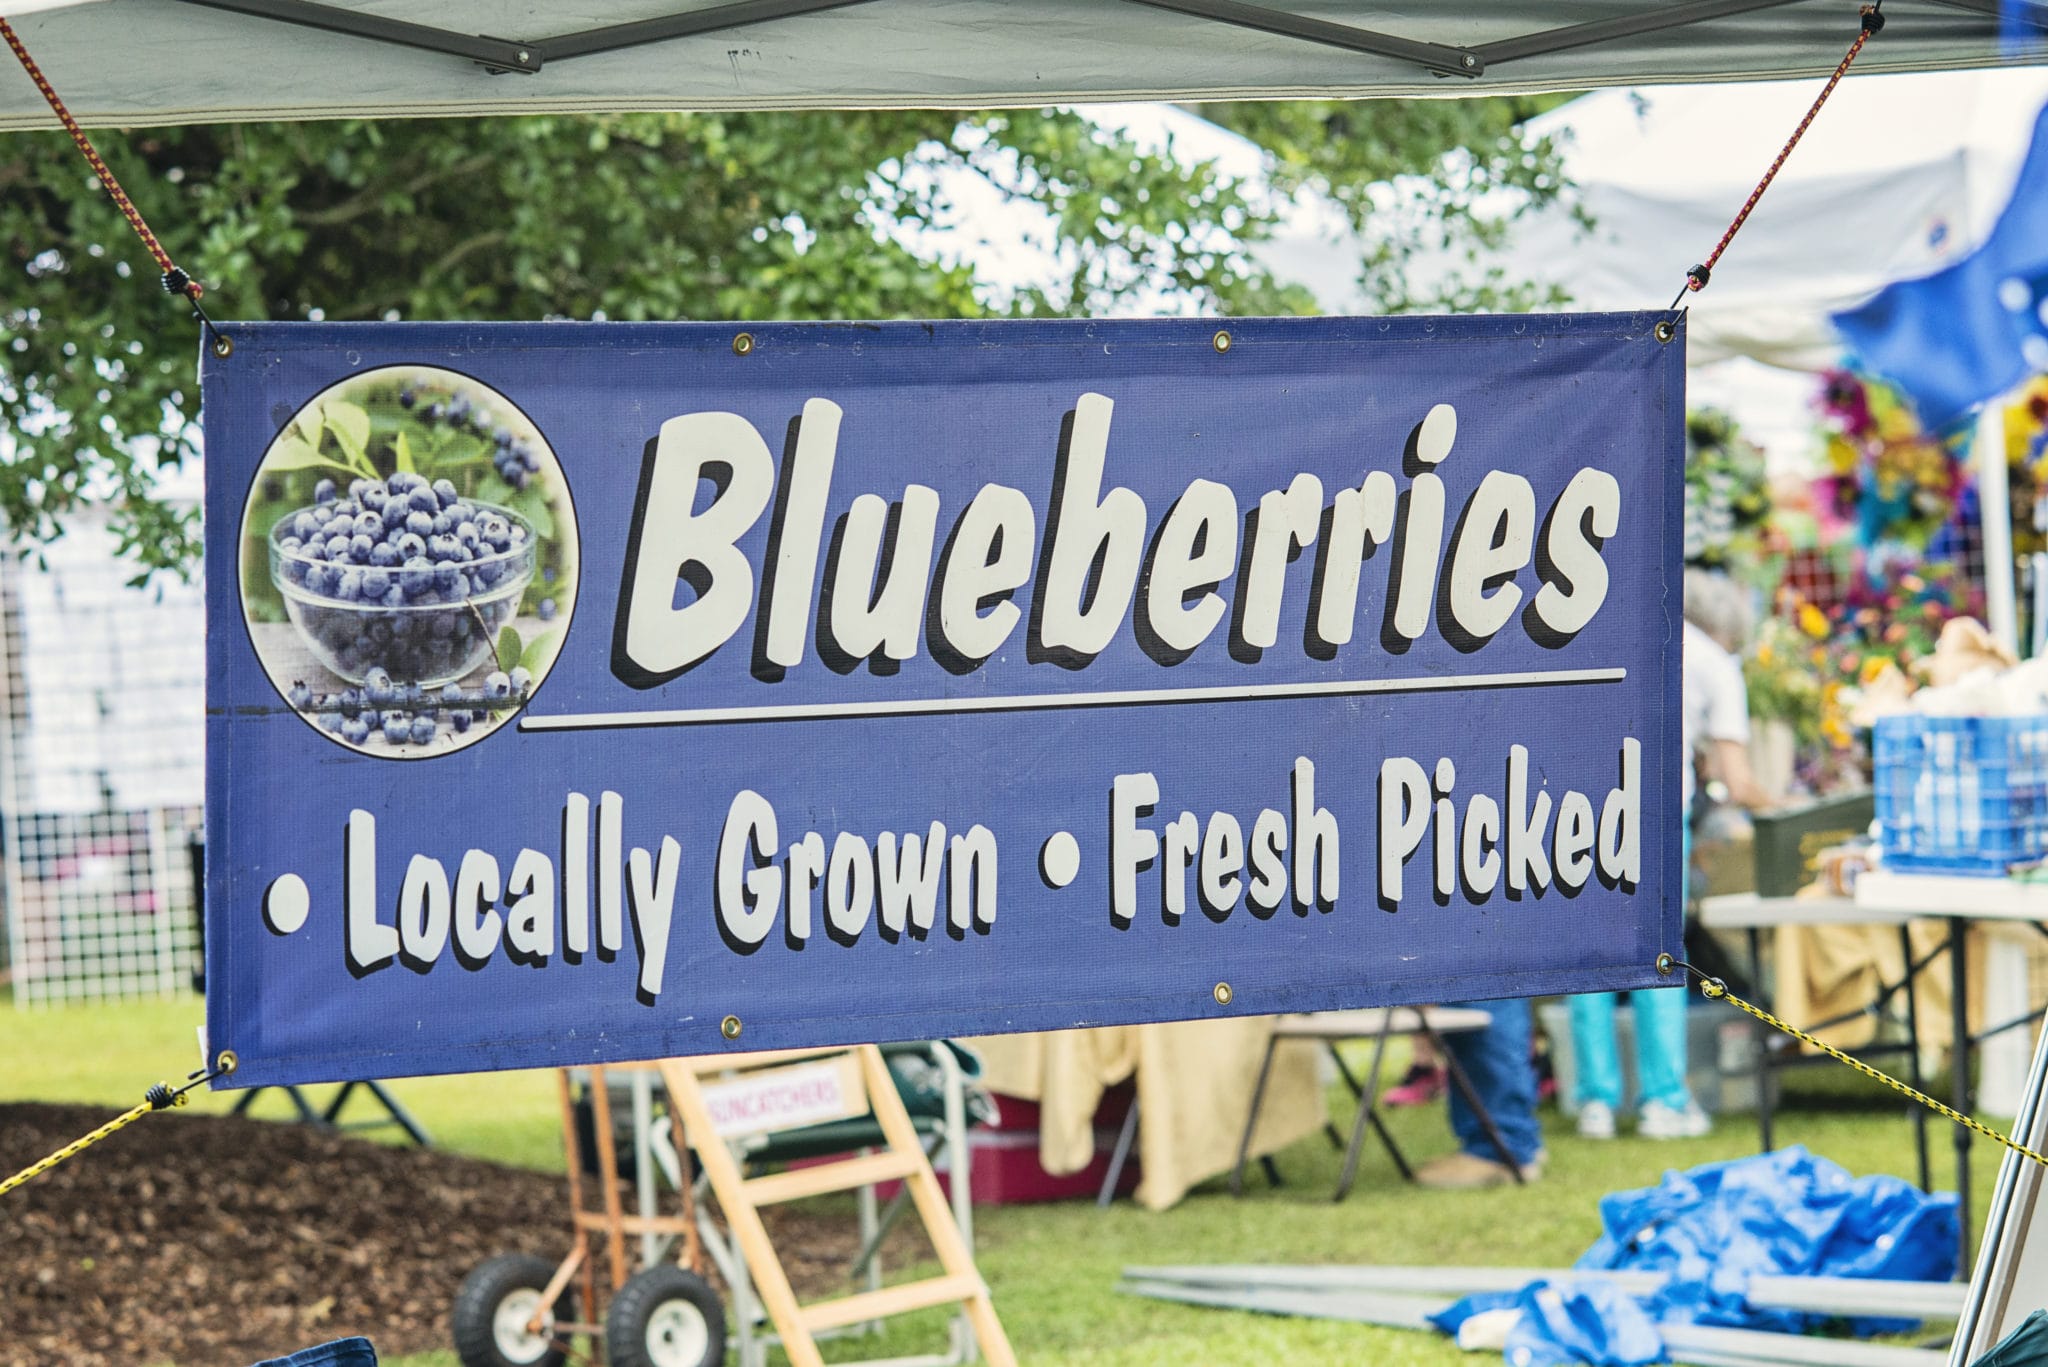 Banner announces fresh blueberries